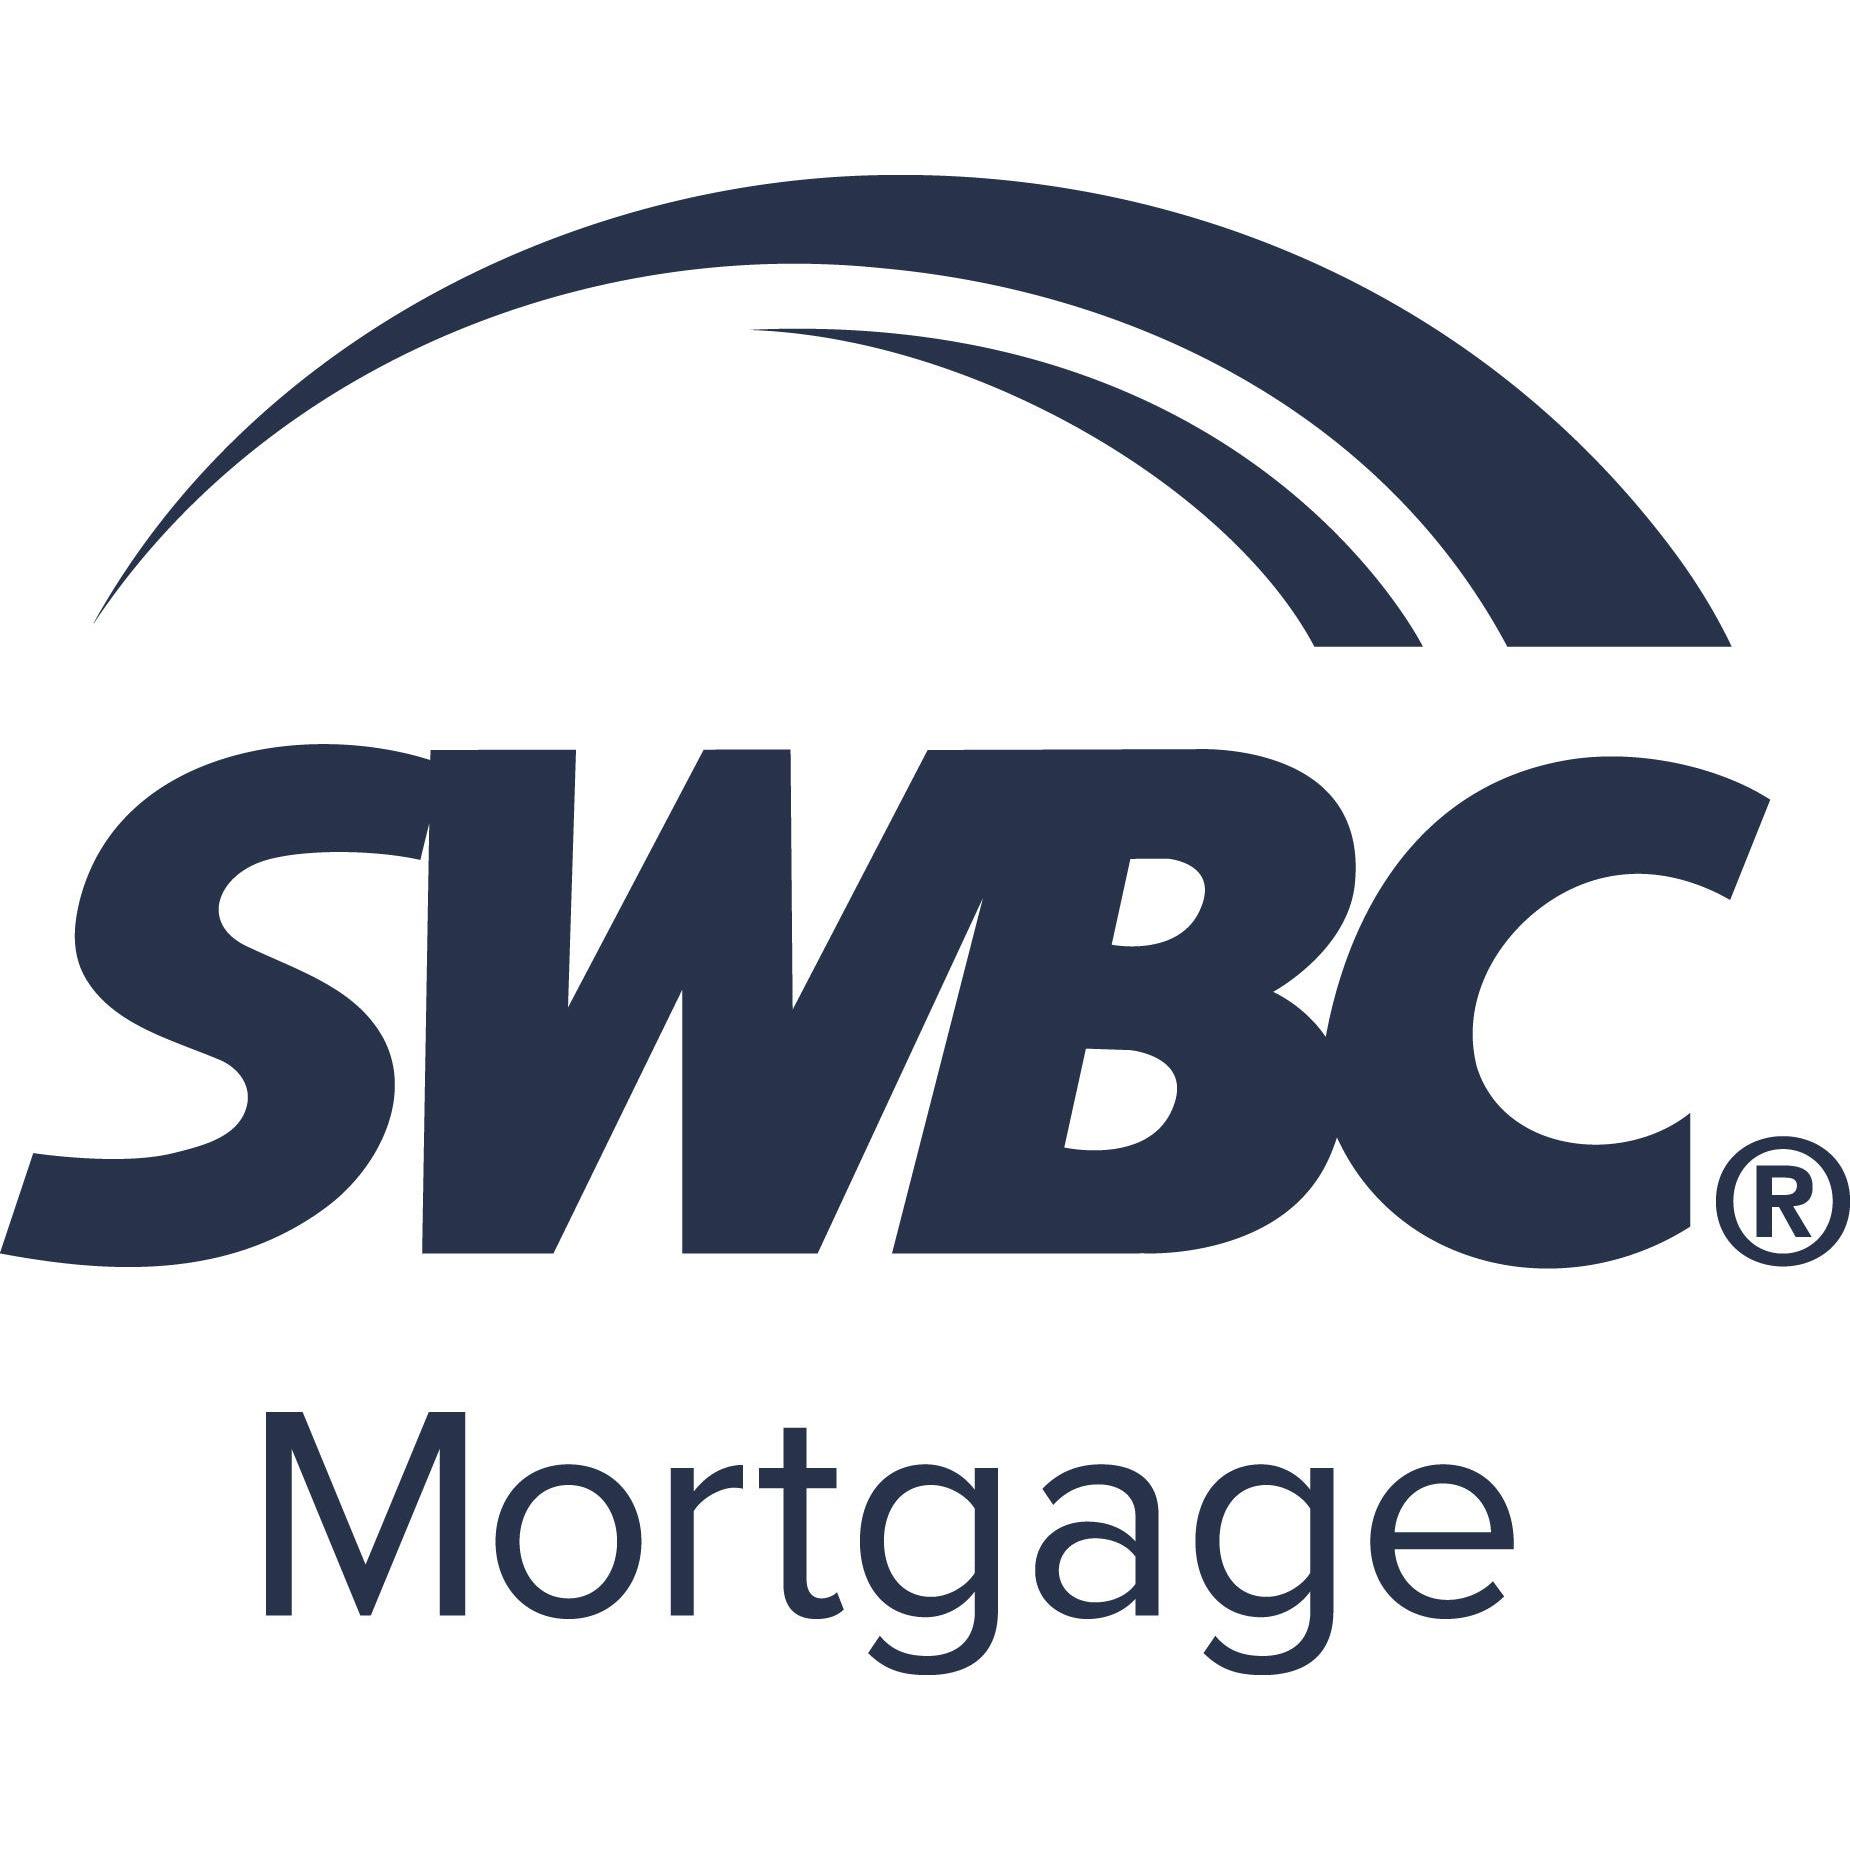 Robert Camras, SWBC Mortgage